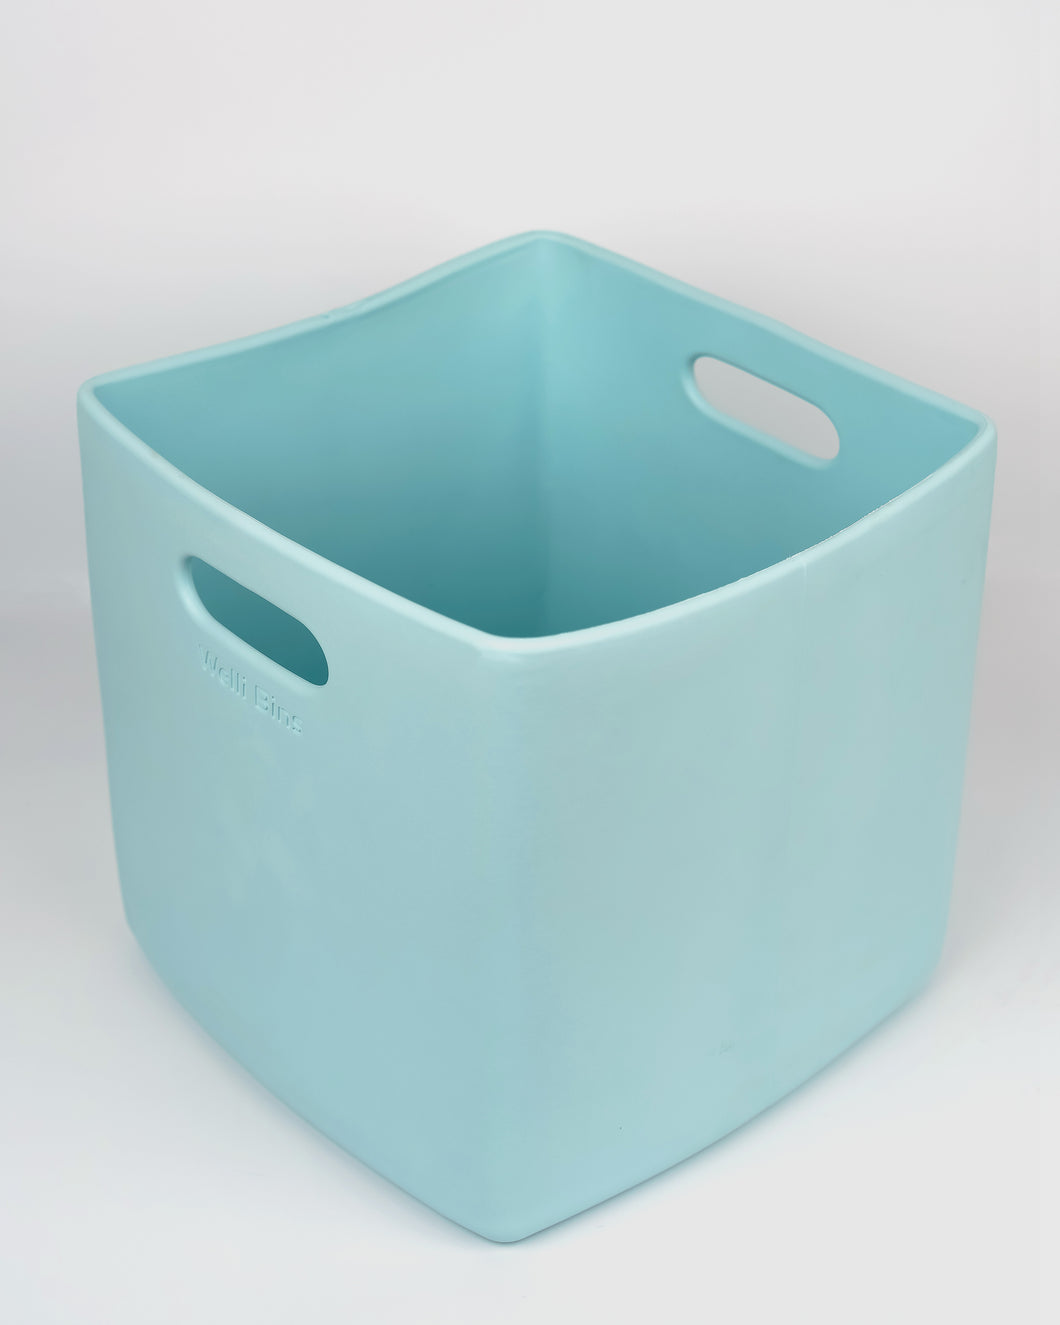 Welli Bins™, the first plant-based, washable and durable storage bin